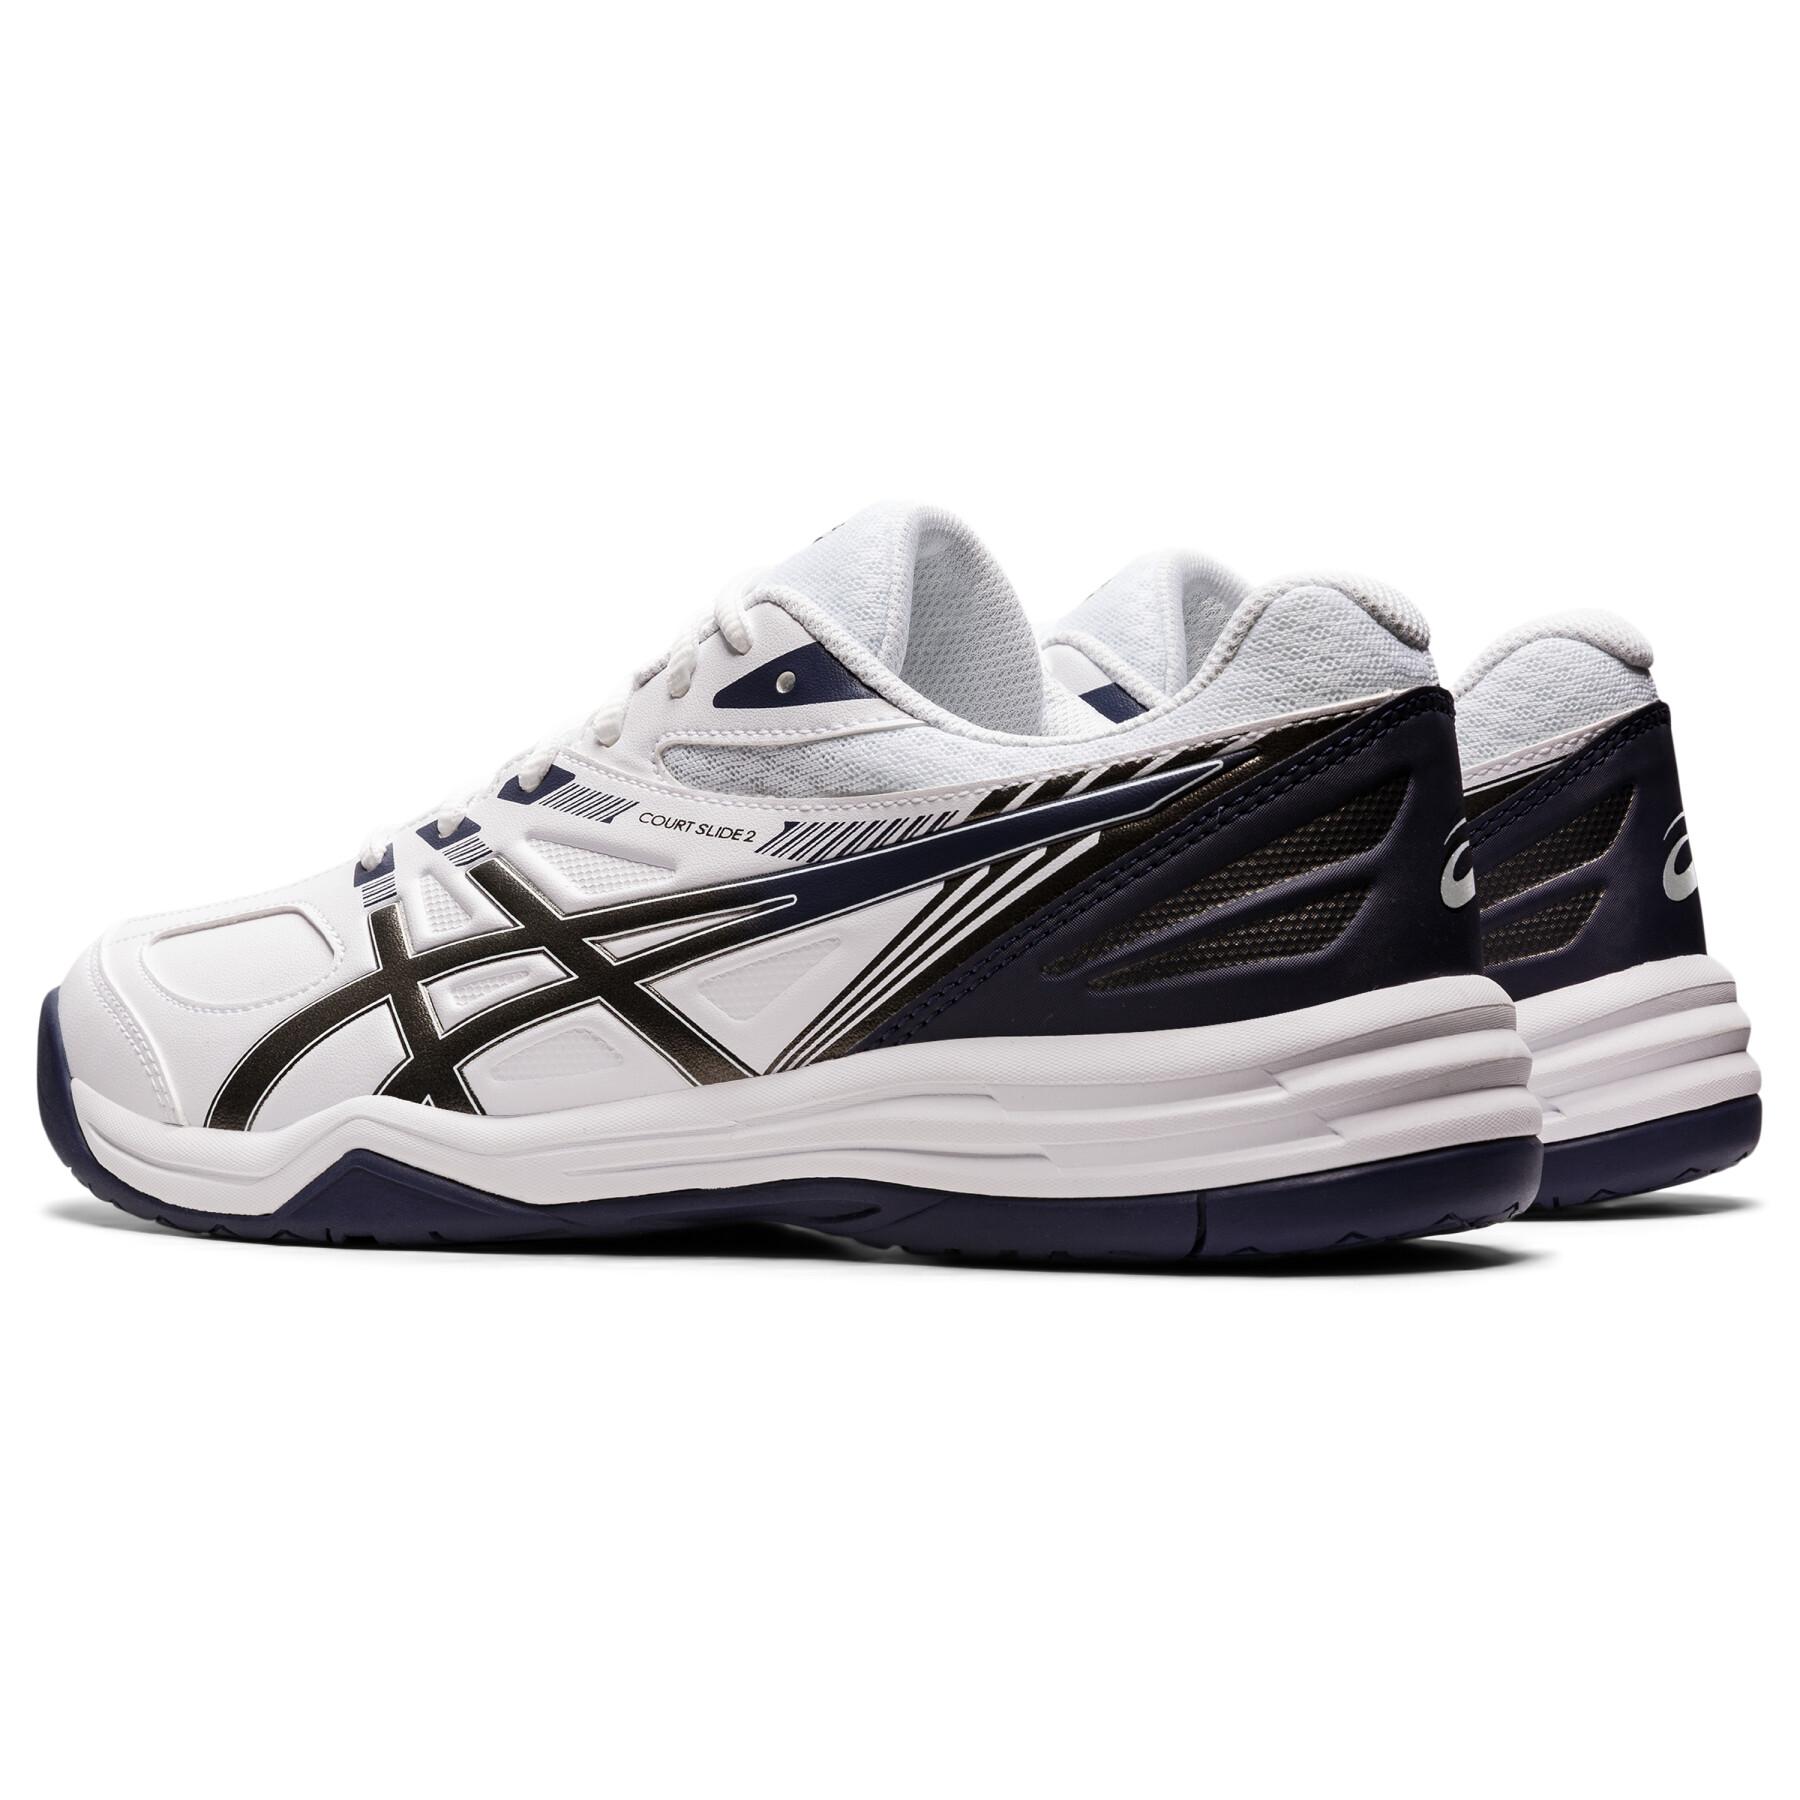 Sapatos de ténis Asics Court Slide 2